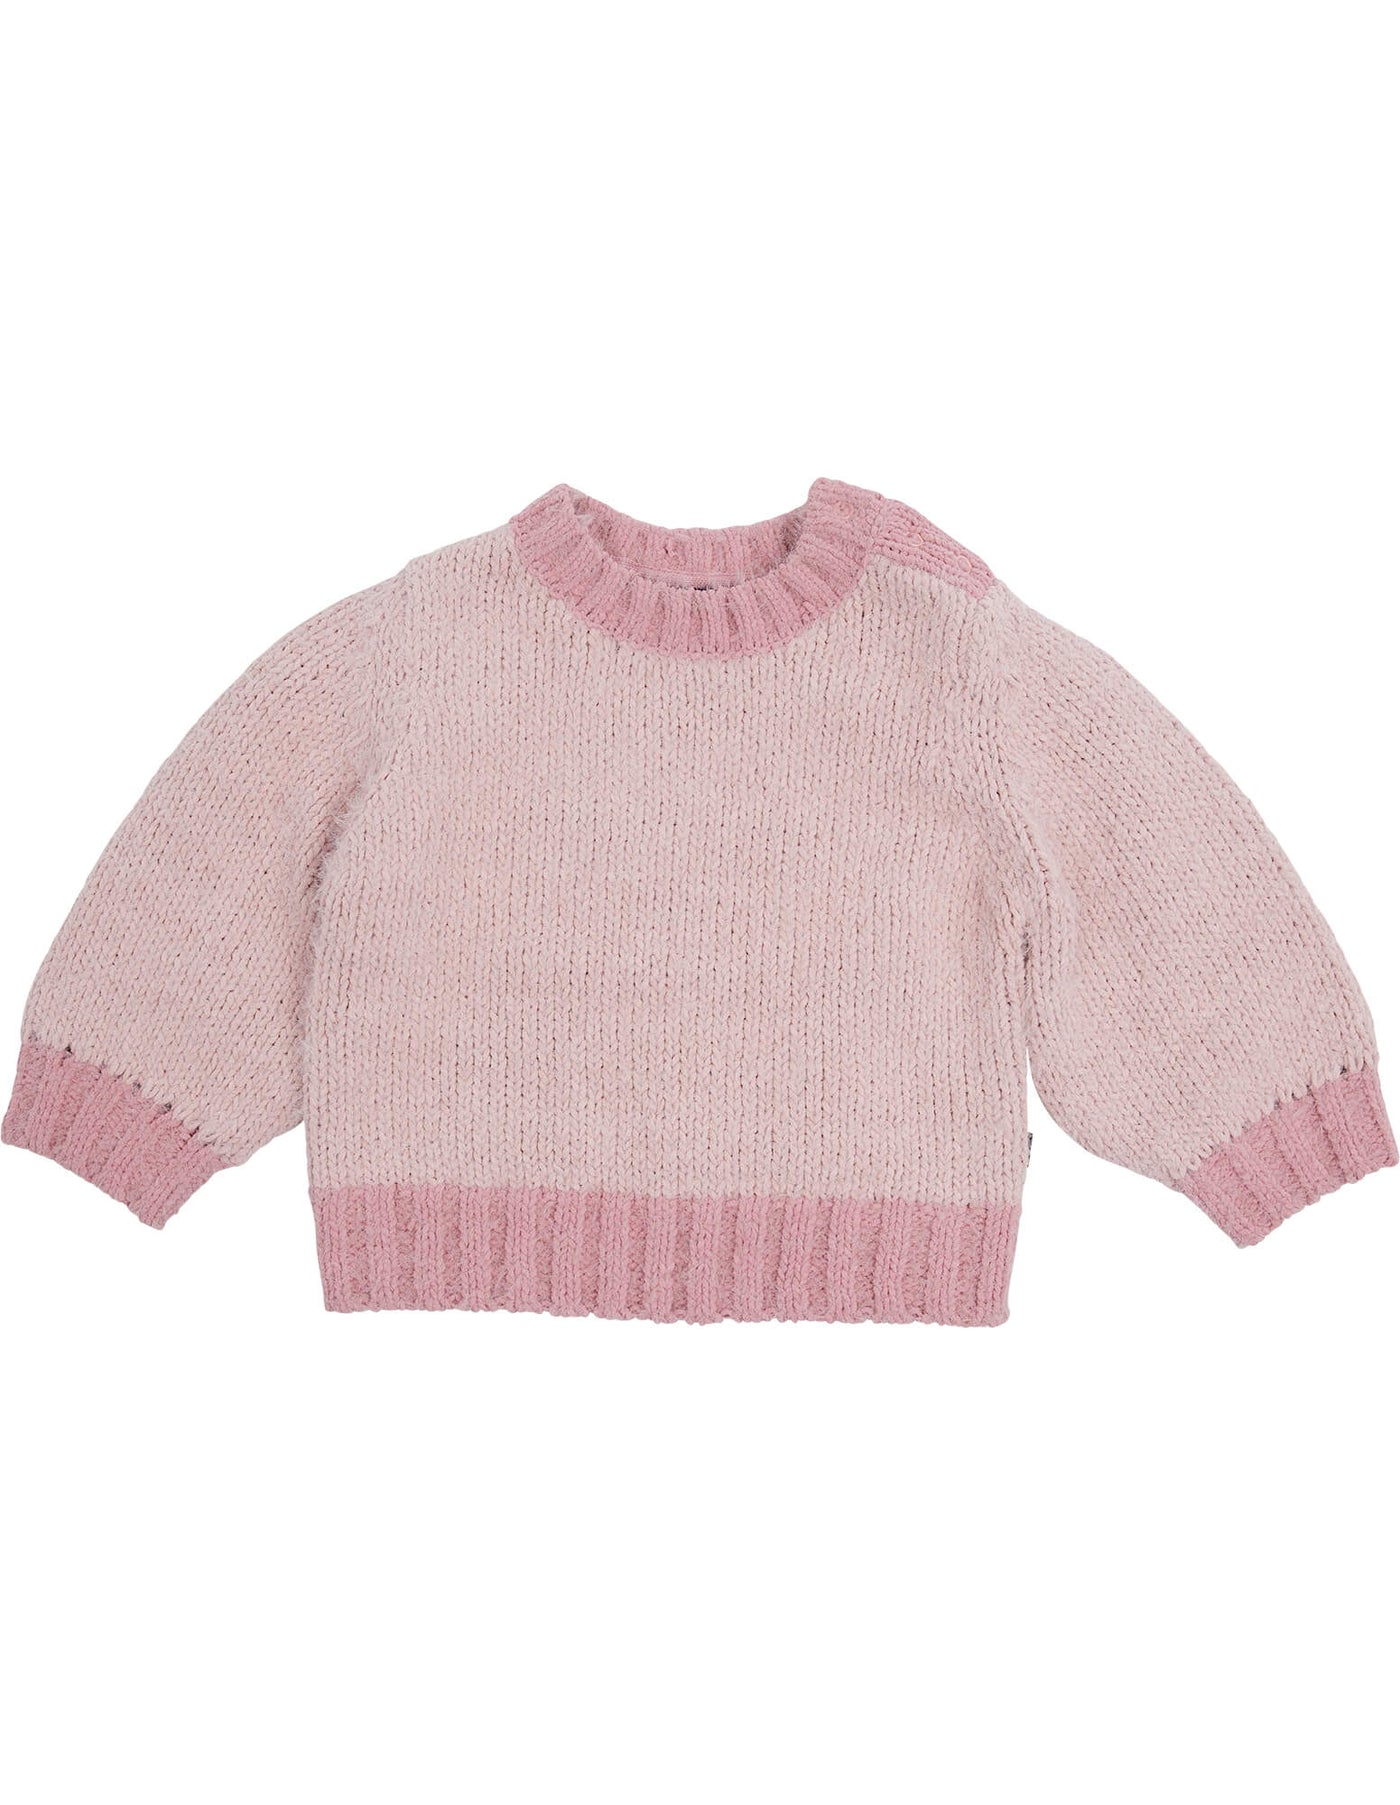 Blossom Knit - Pink